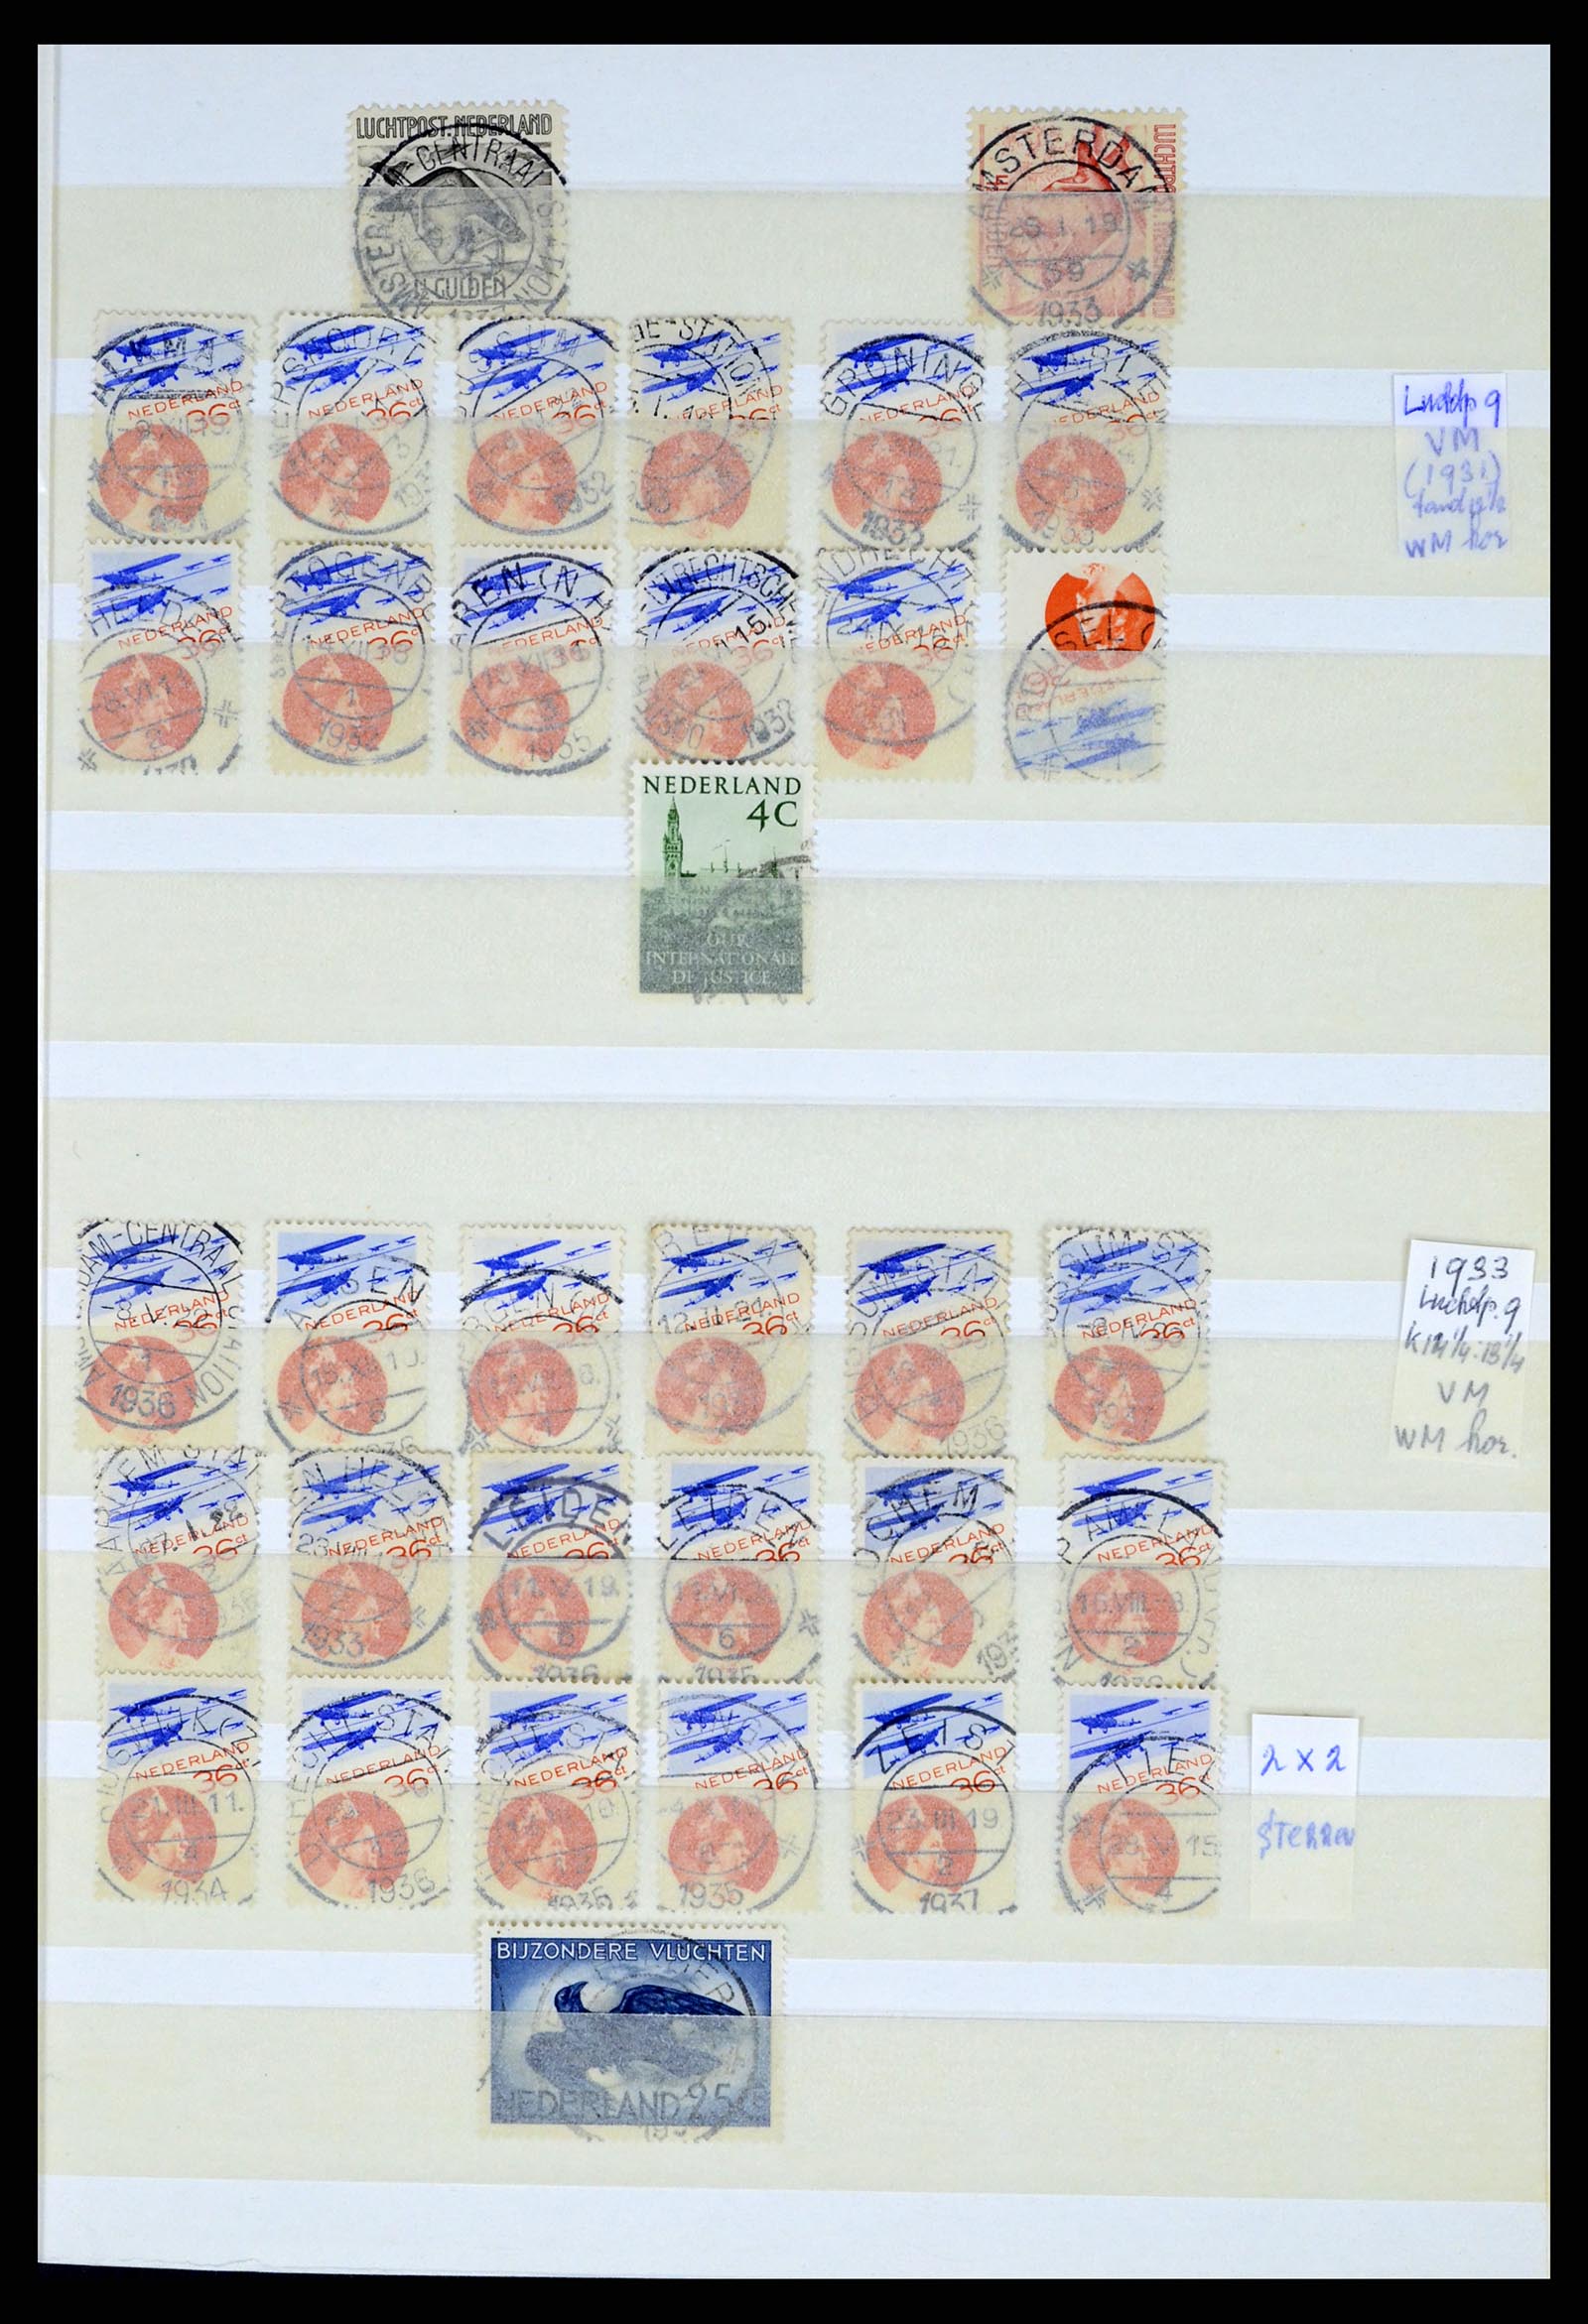 37424 063 - Stamp collection 37424 Netherlands shortbar cancels.